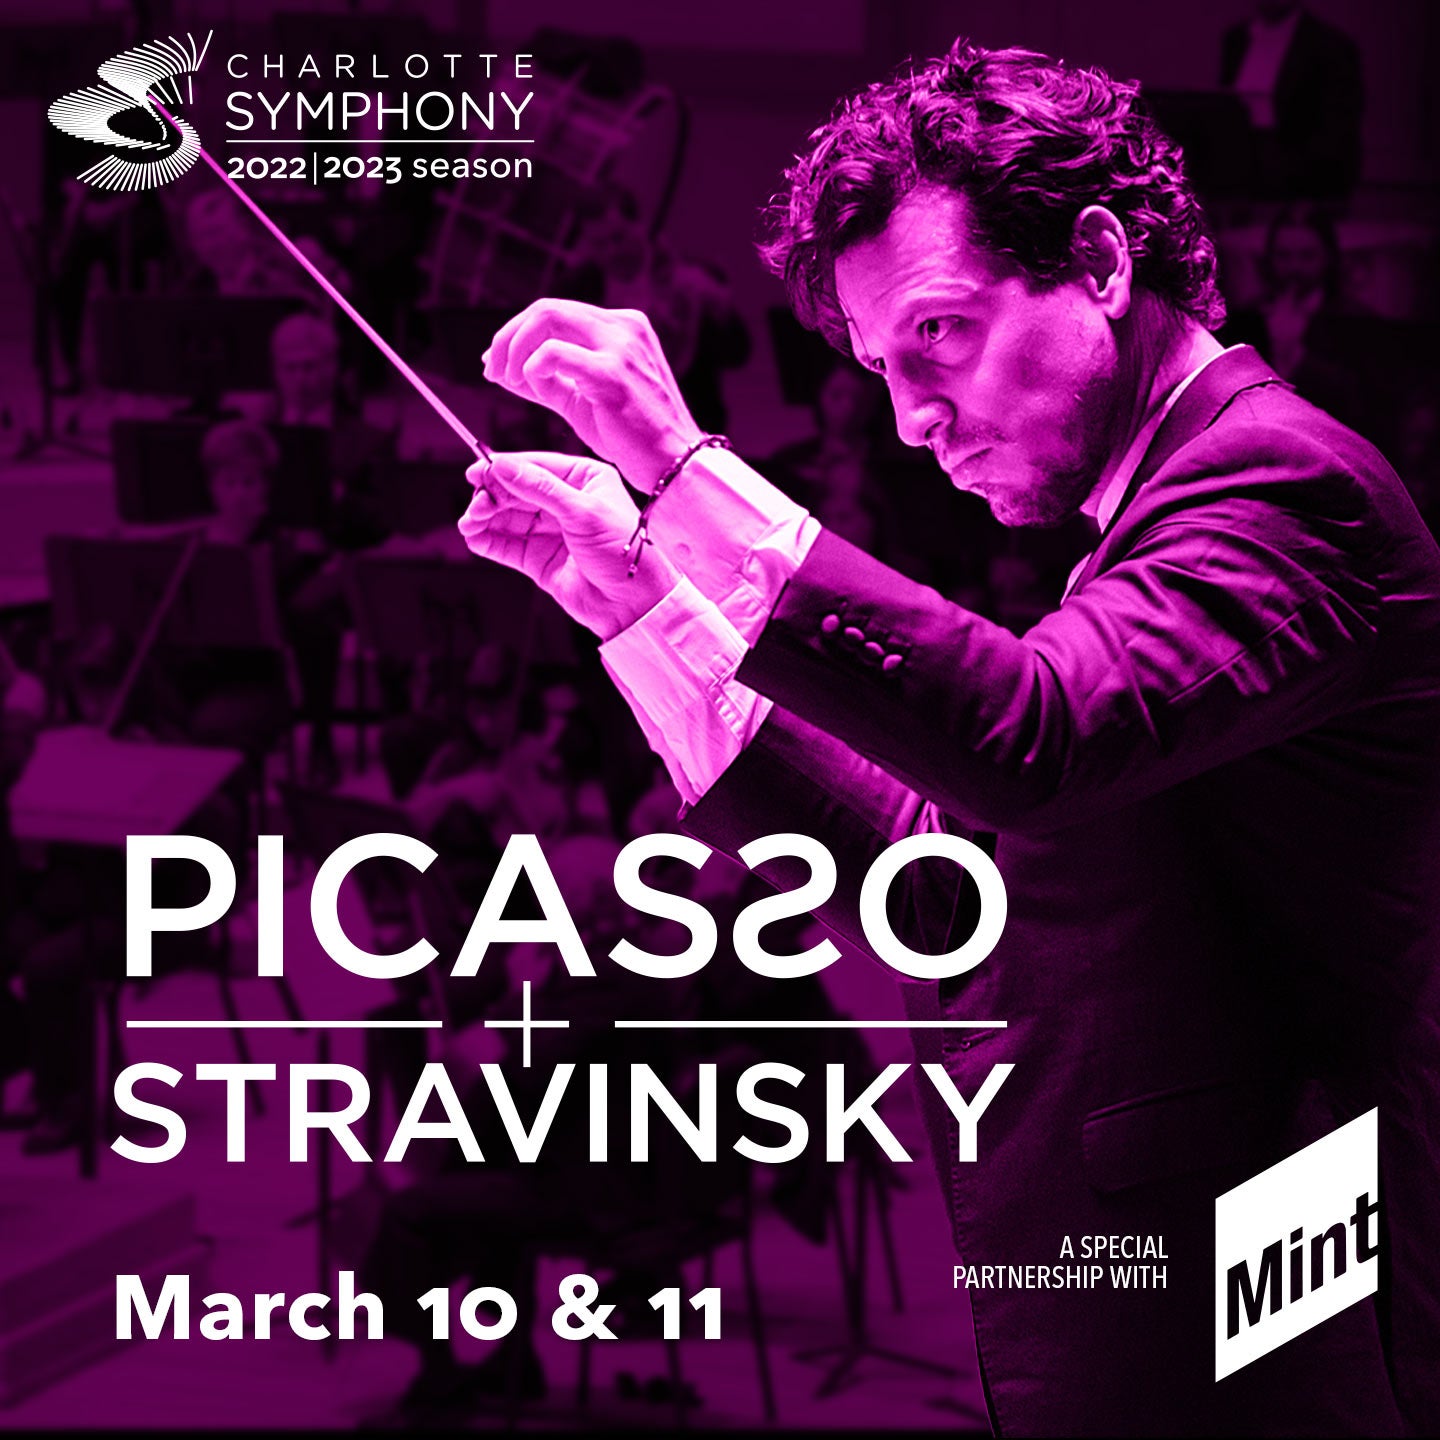 Charlotte Symphony: Picasso + Stravinsky